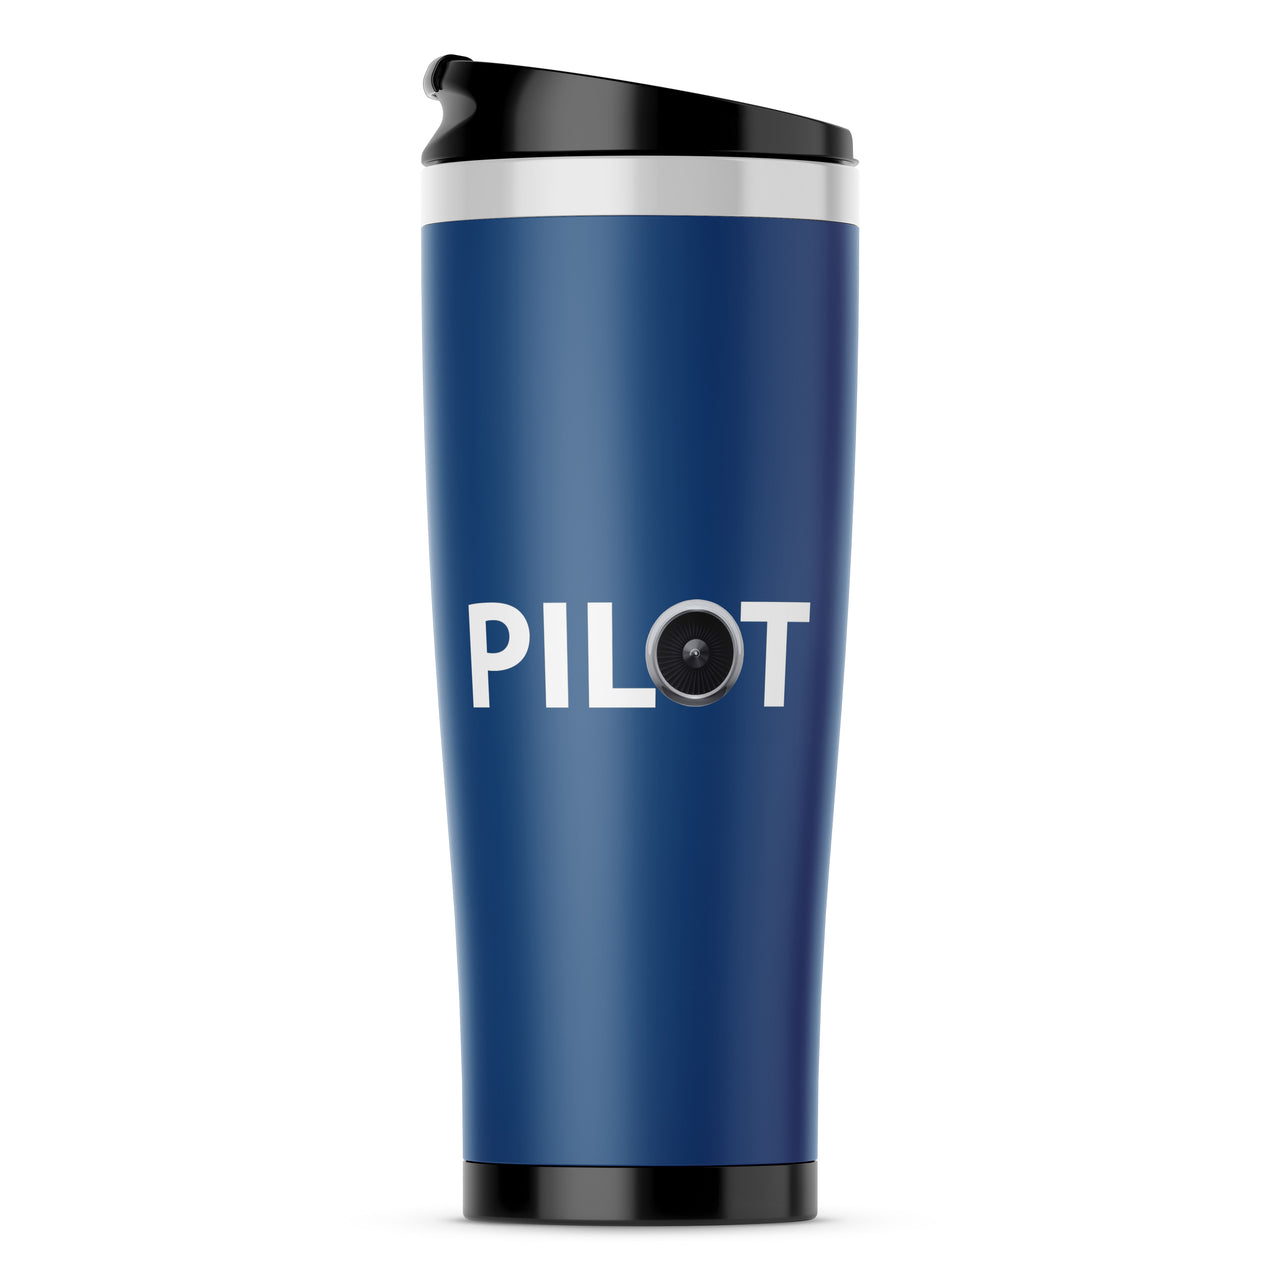 Pilot & Jet Engine Designed Travel Mugs